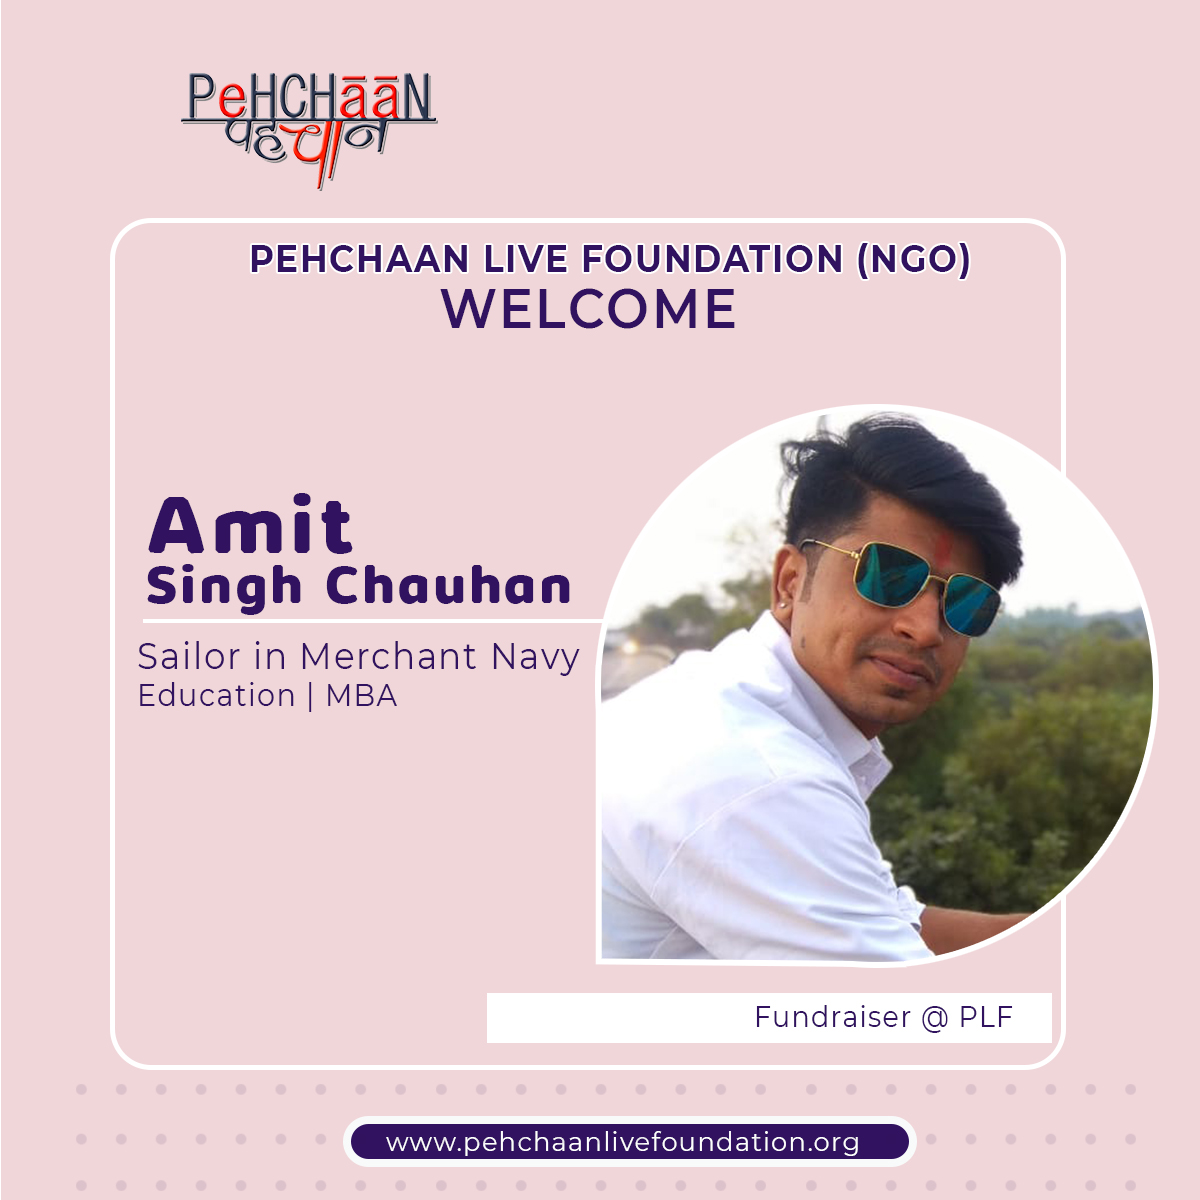 AMIT SINGH CHAUHAN (Fundraiser @ PLF)